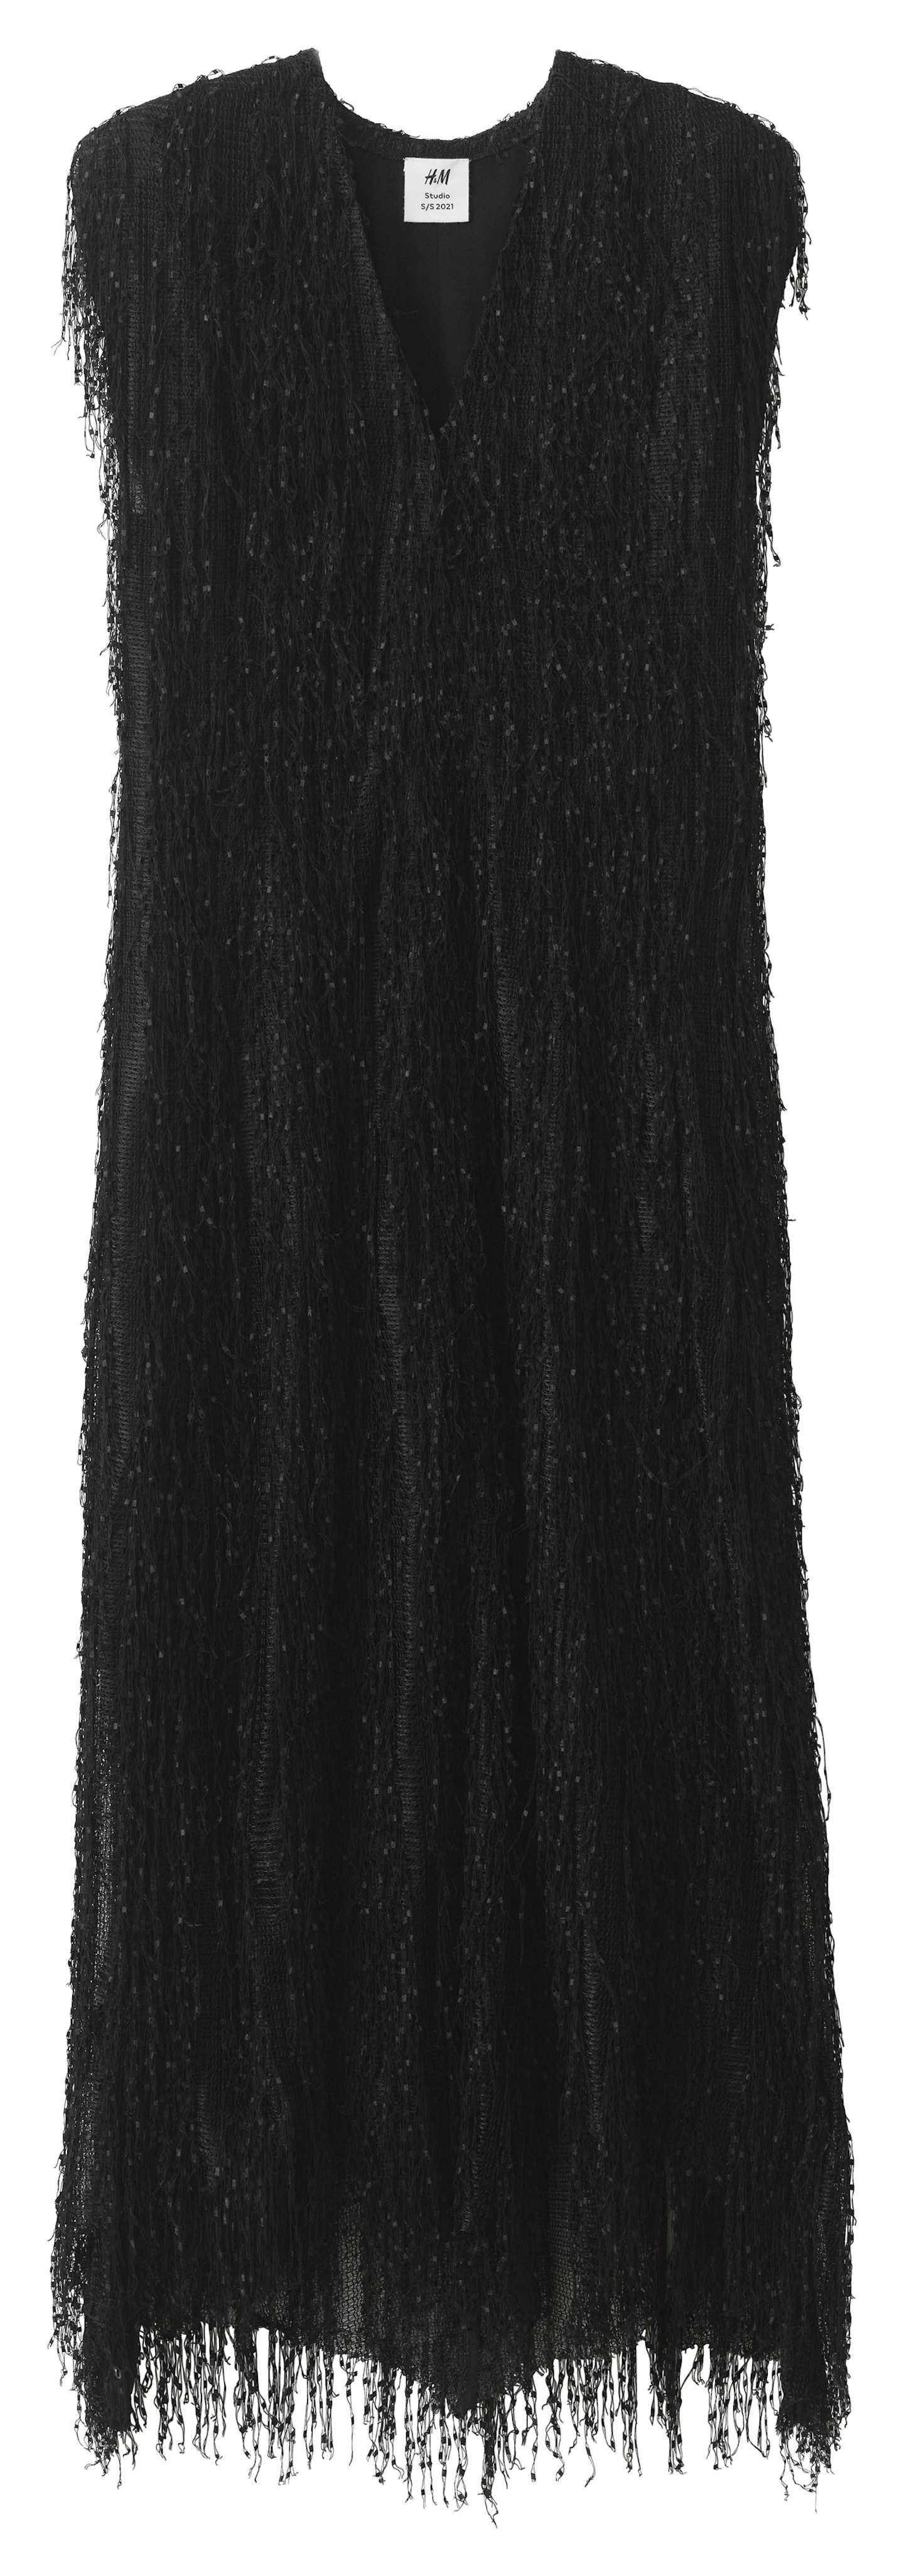 Black Fringed Dress, £99.99